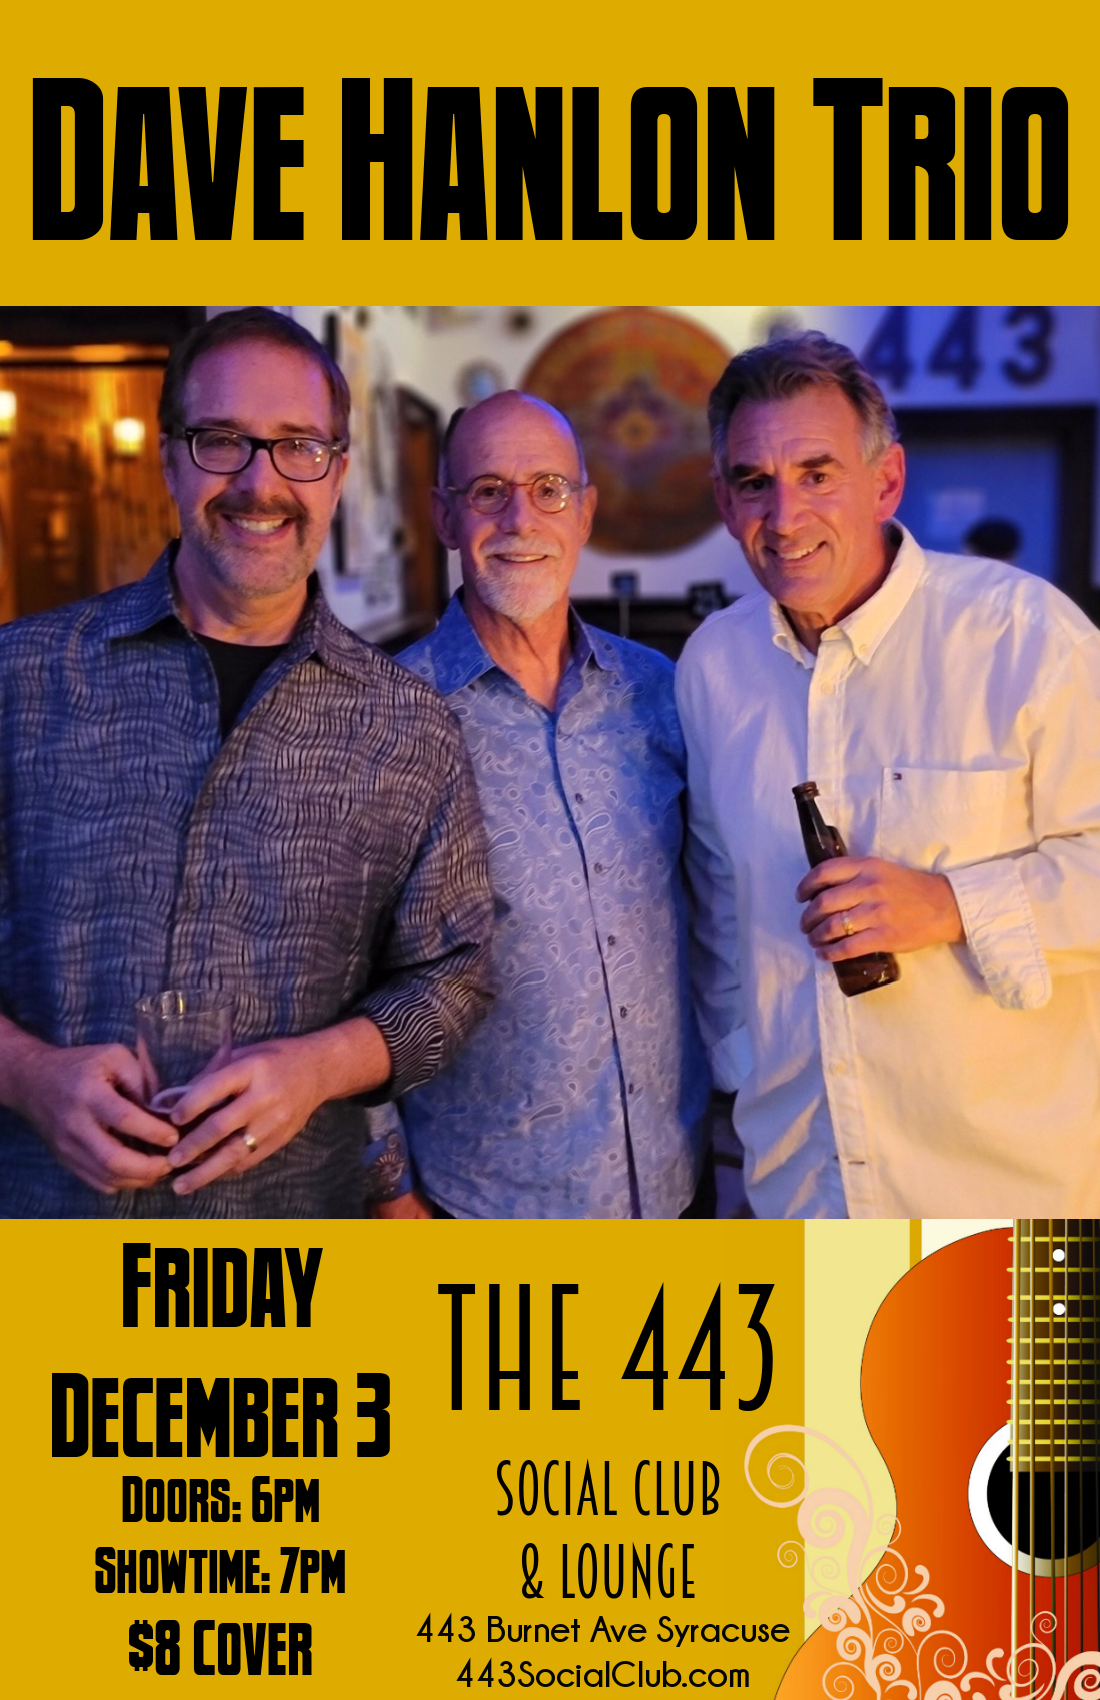 Dave Hanlon Trio - 12/3 - The 443 Social Club & Lounge